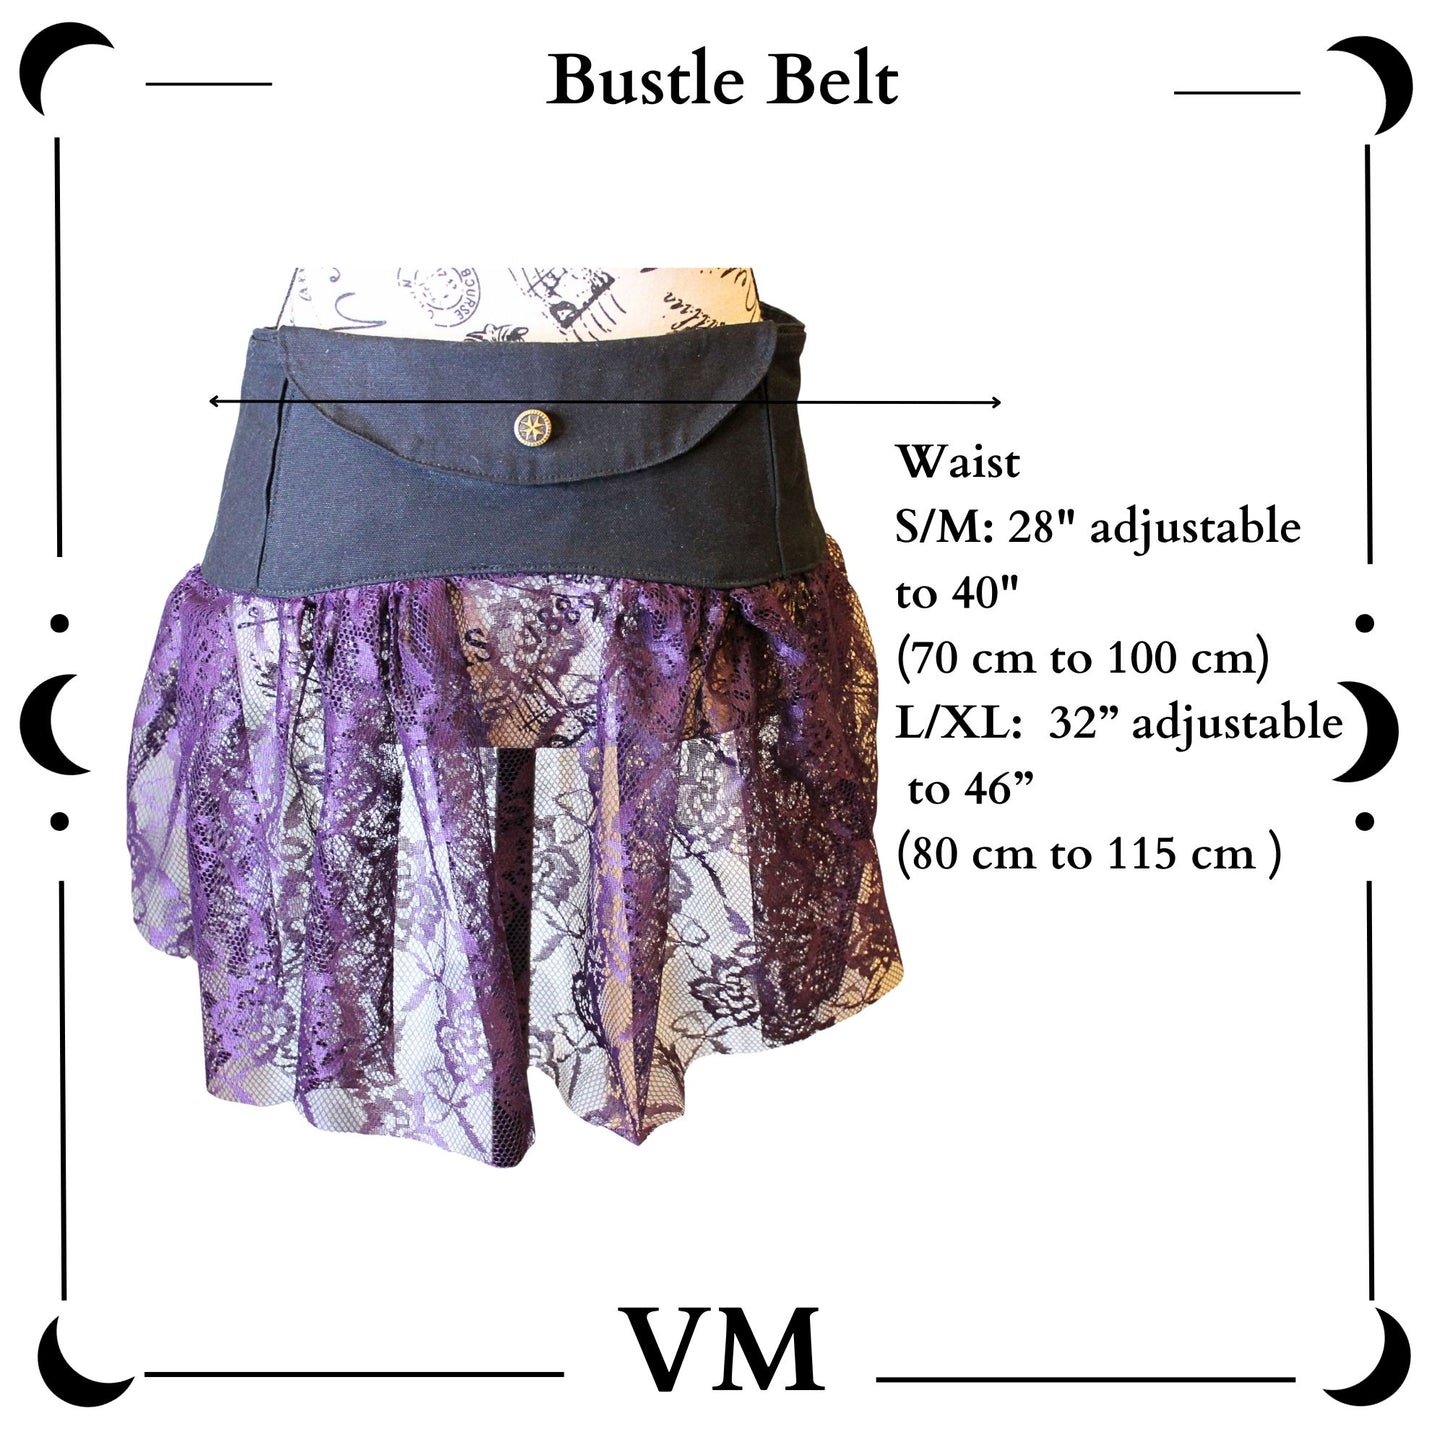 The VM Bustle Belt